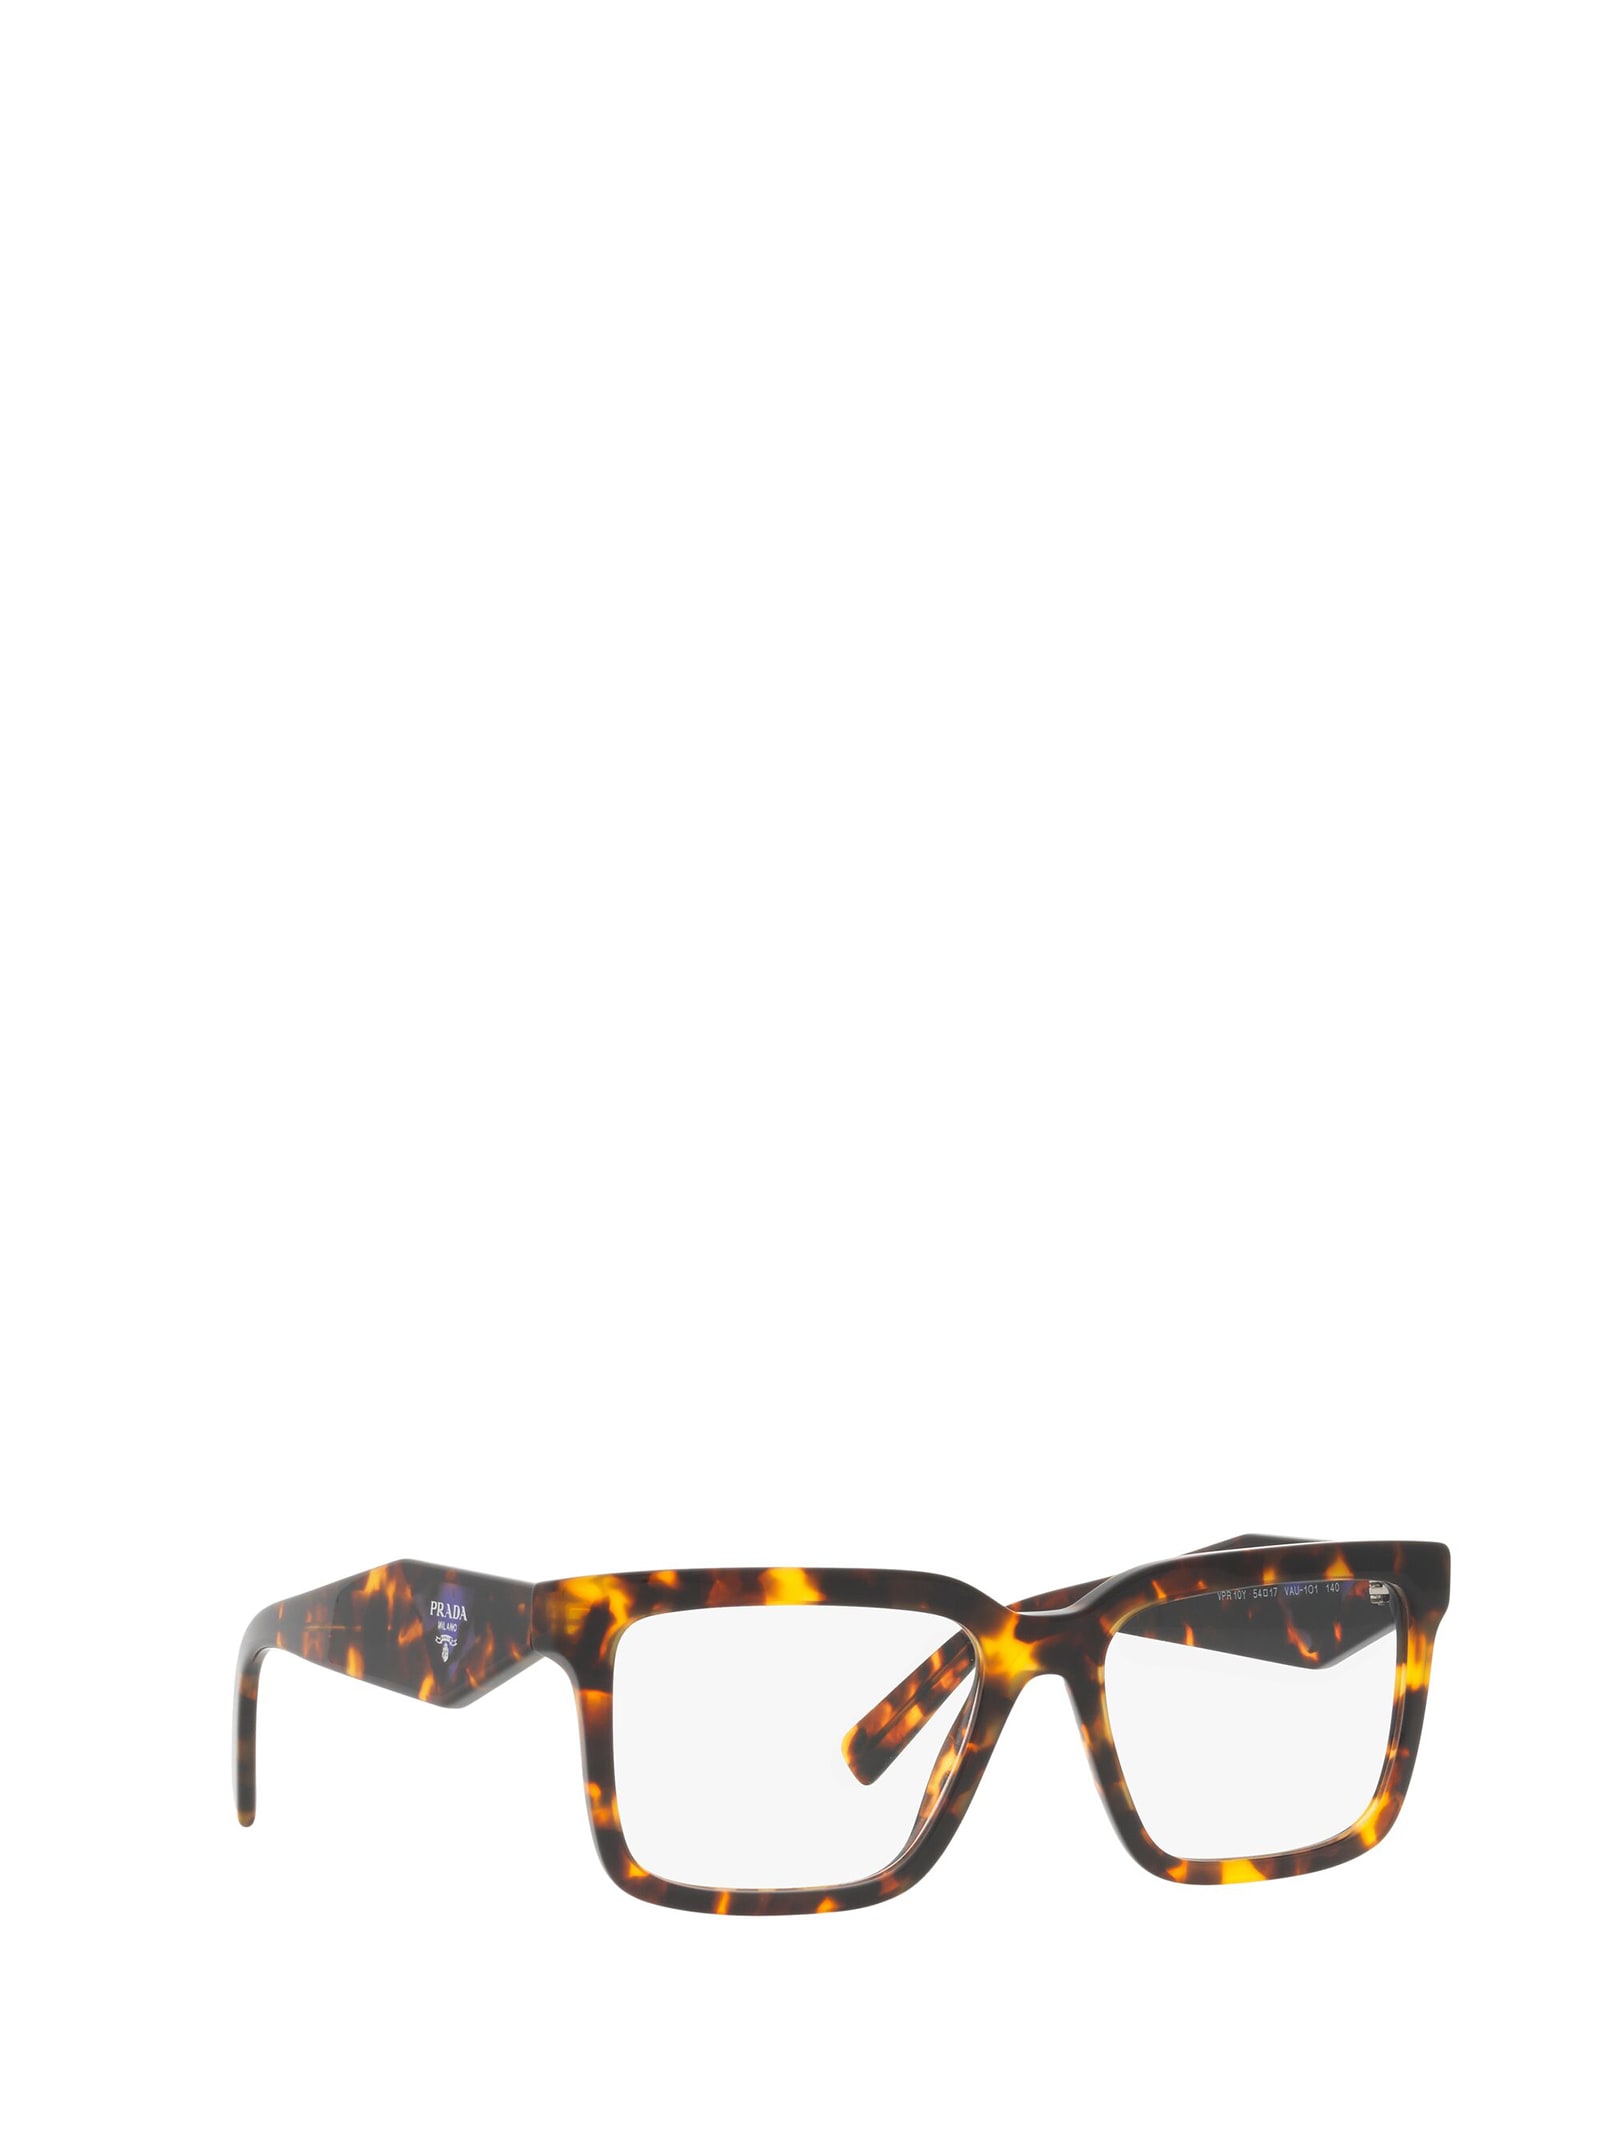 Prada Eyewear Pr 10yv Honey Tortoise Glasses | italist, ALWAYS LIKE A SALE